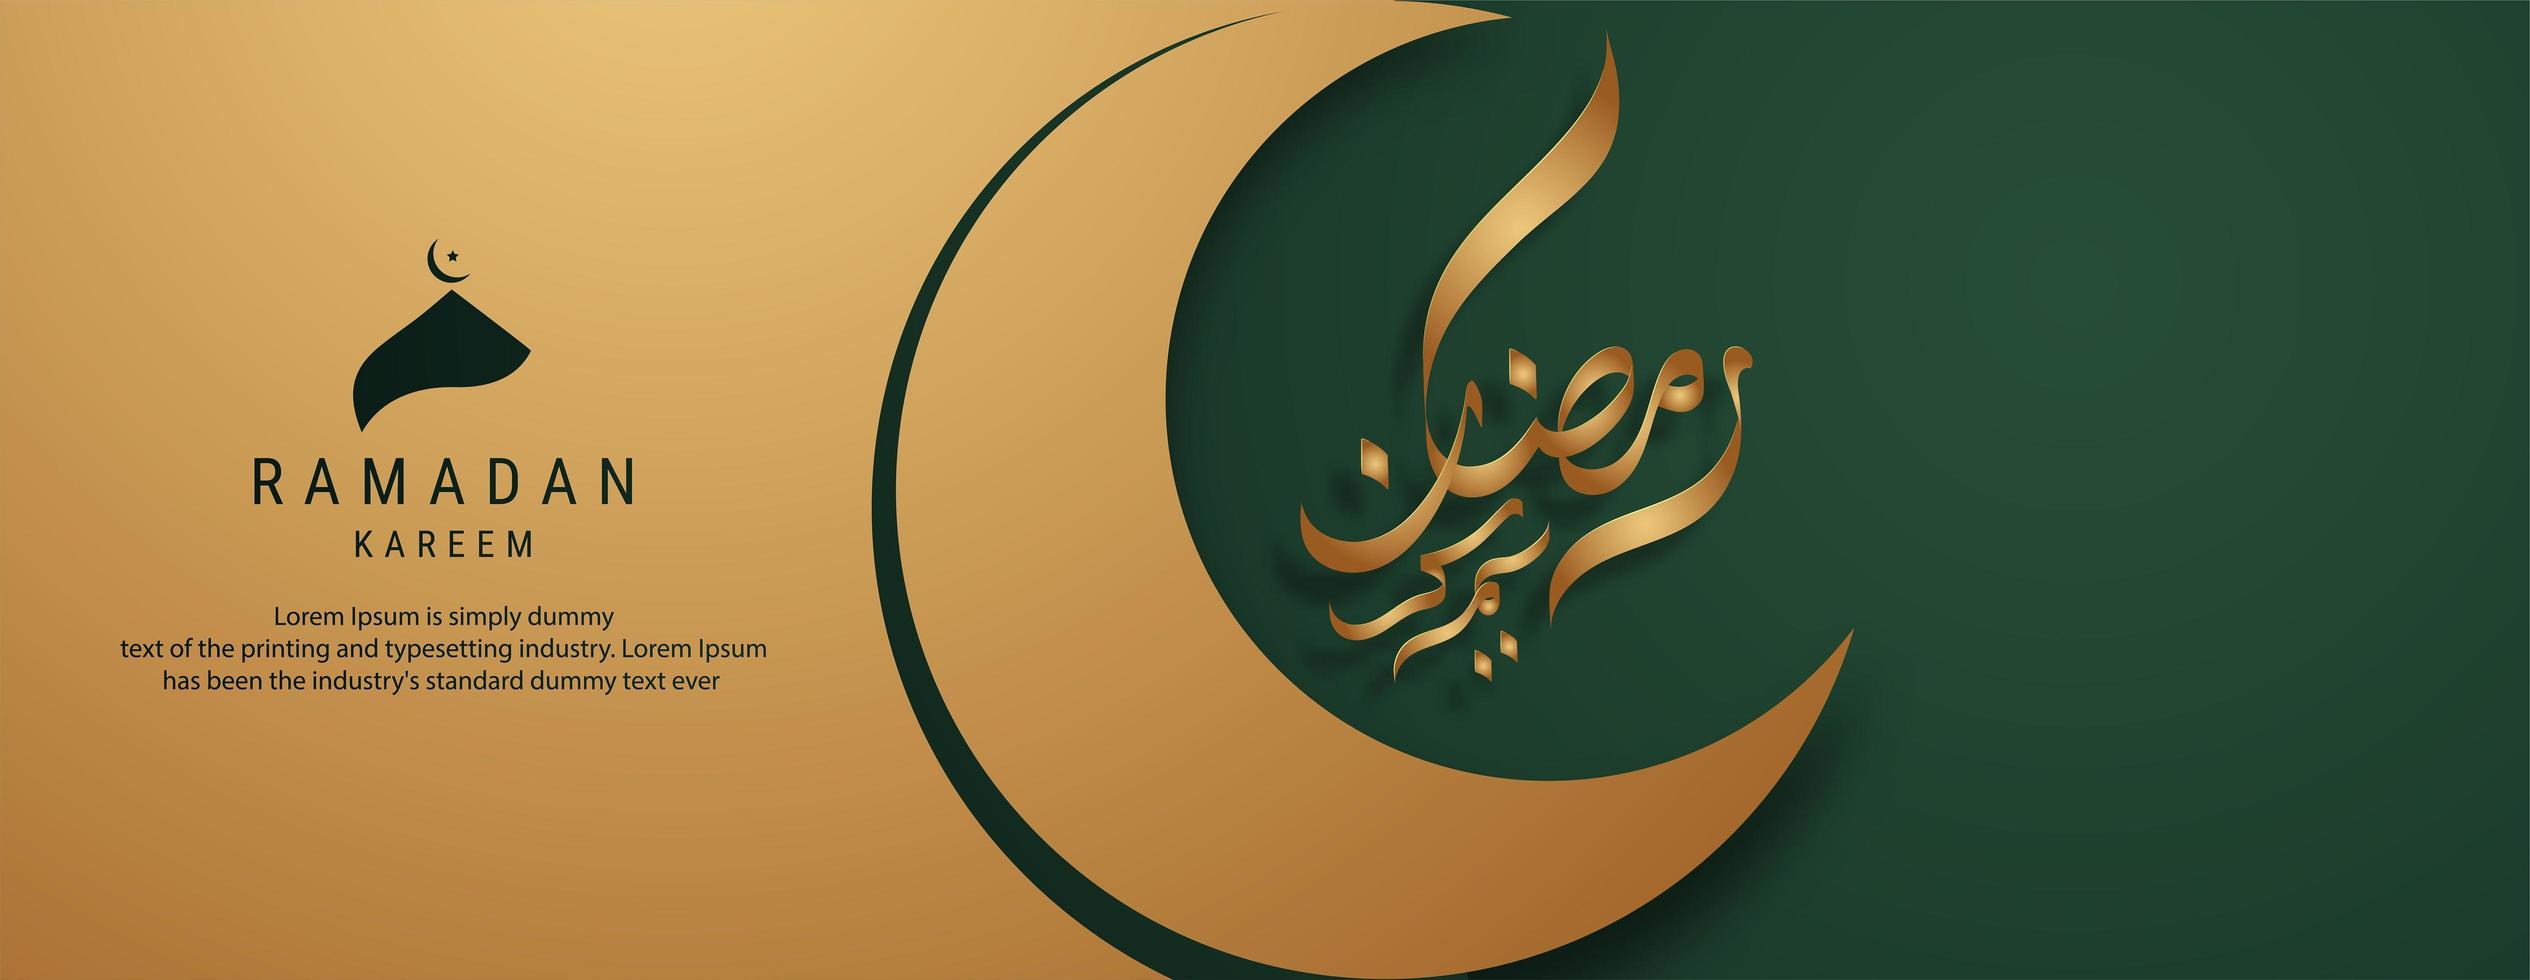 Ramadan Kareem banner design vettore